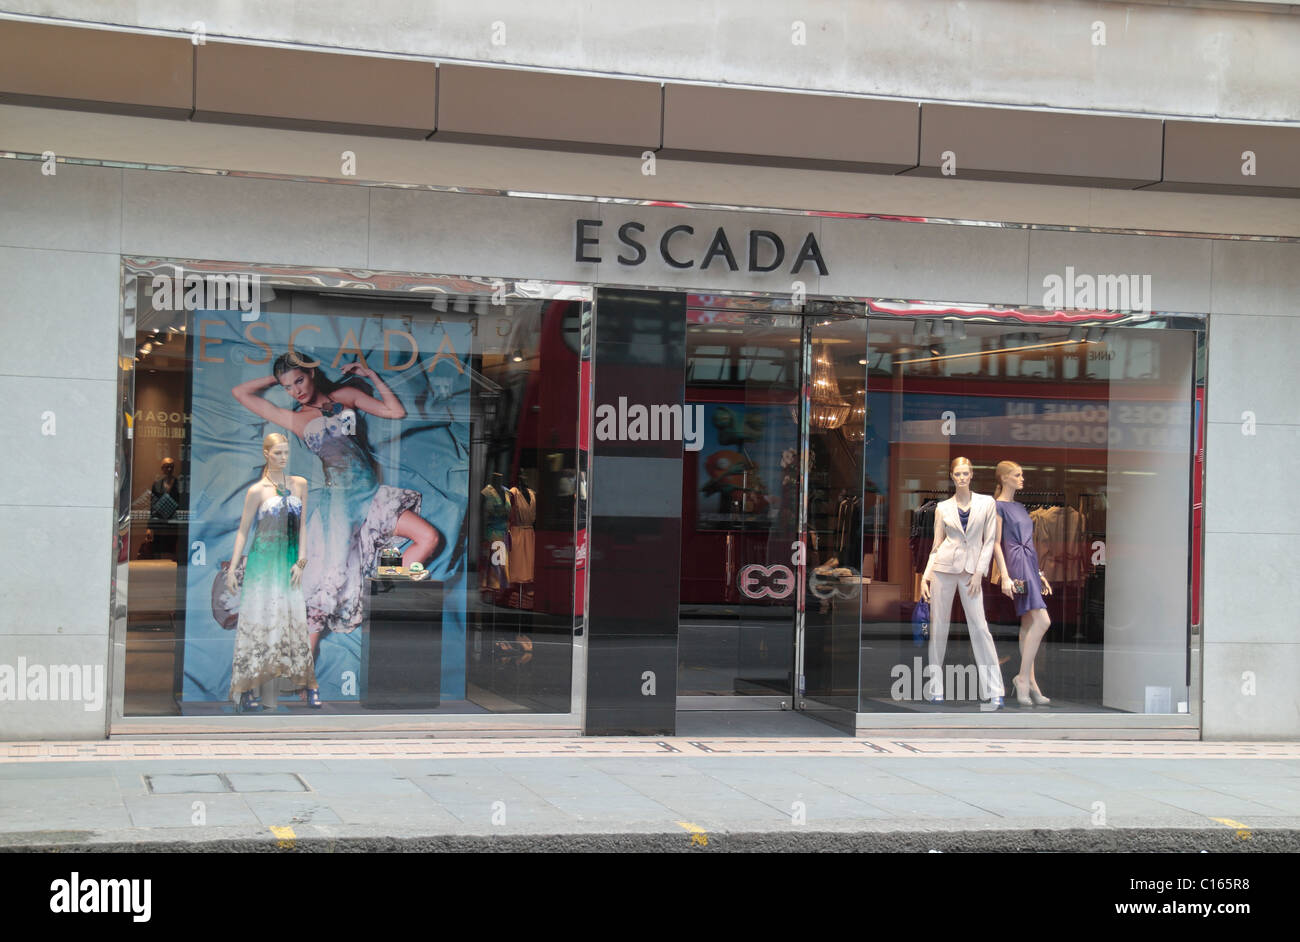 The Escada fashion shop for older women on Sloane Street, London, SW1,  England Stock Photo - Alamy